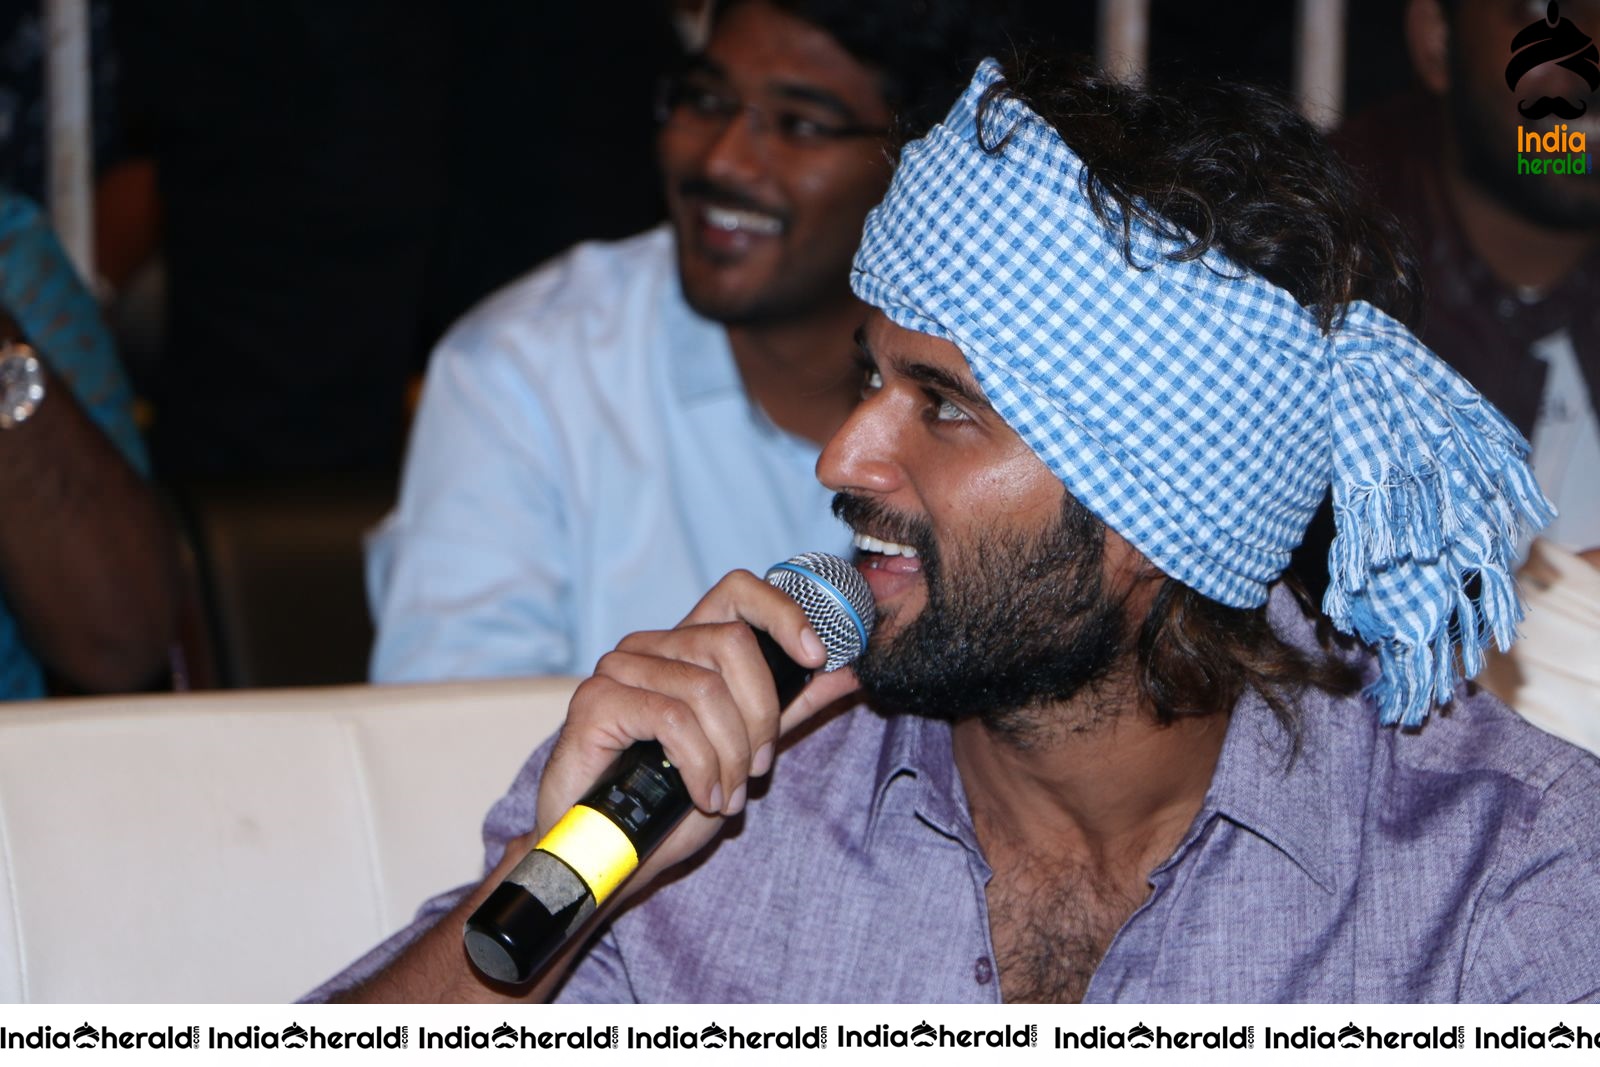 Actor Vijay Deverakonda Latest Photos in Lungi during WFL event